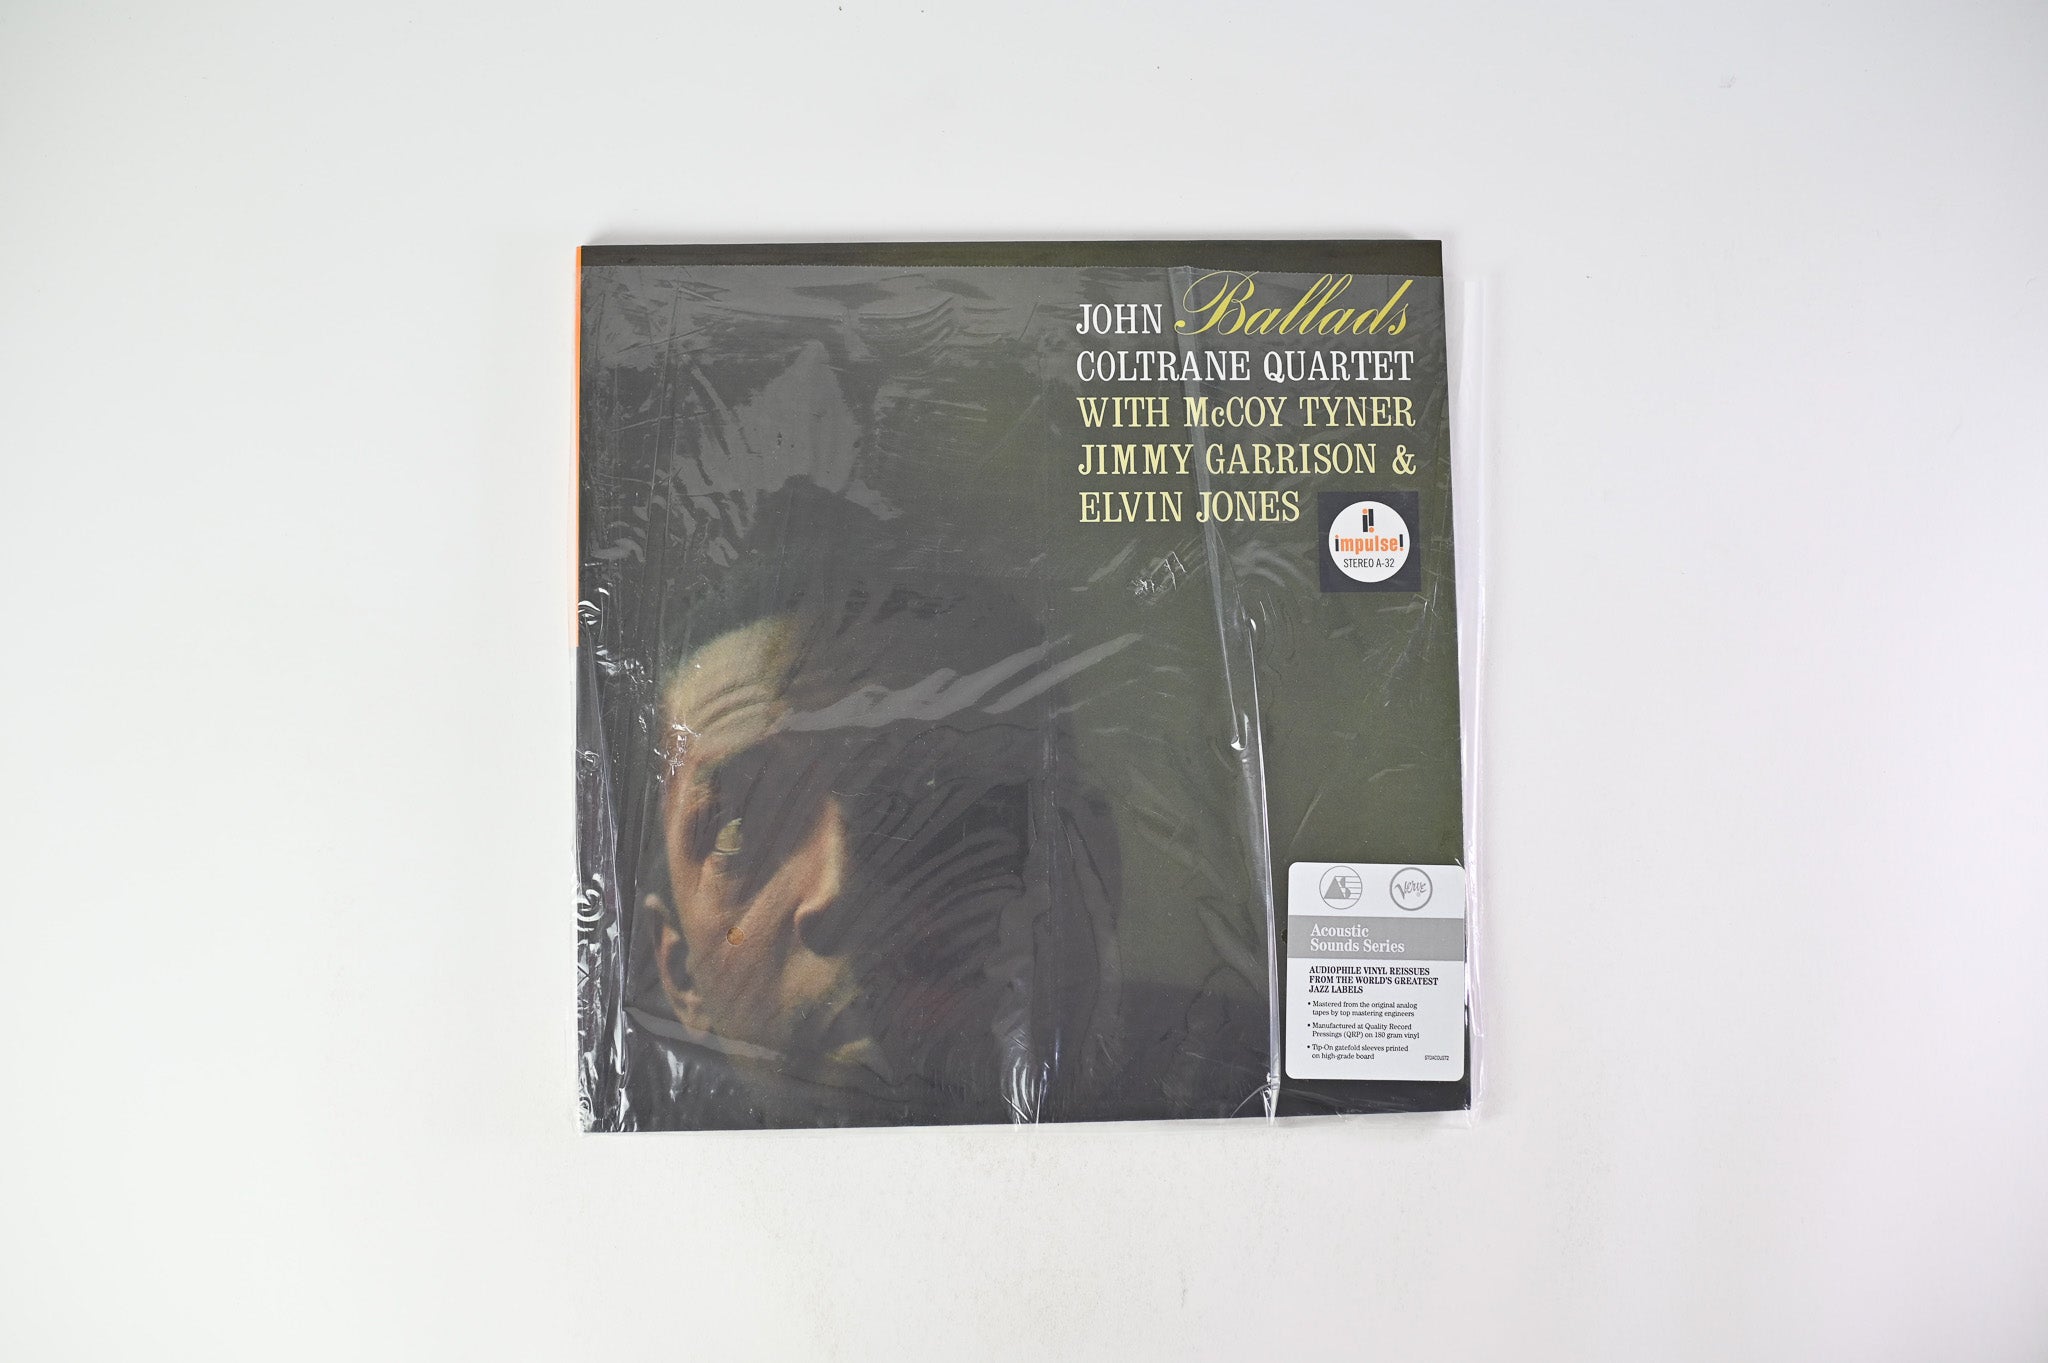 The John Coltrane Quartet - Ballads on Impulse Acoustic Sounds Series 180 Gram Reissue